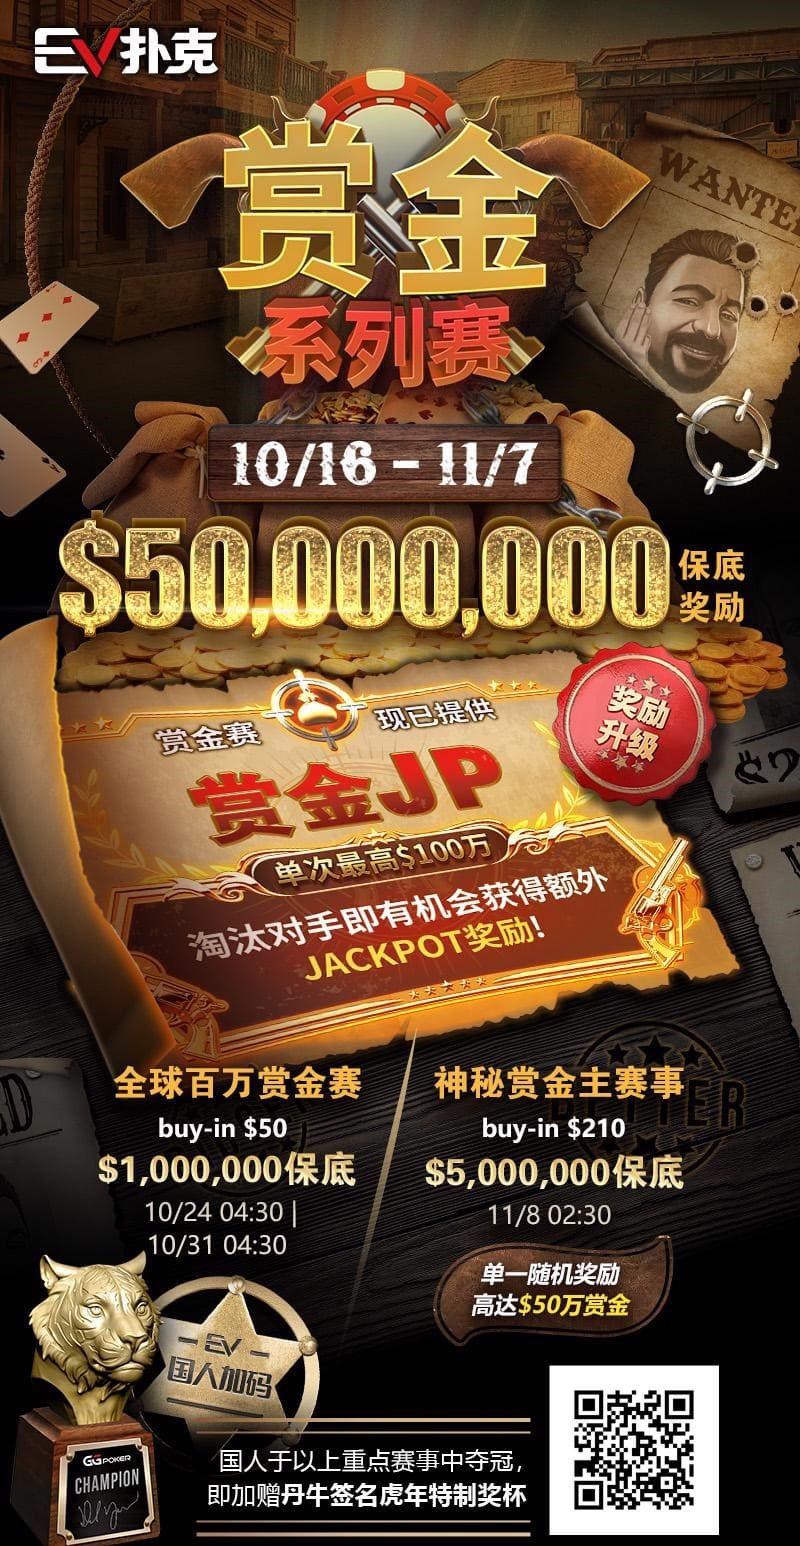 【EV扑克】双11大放送 百万比赛门票免费送